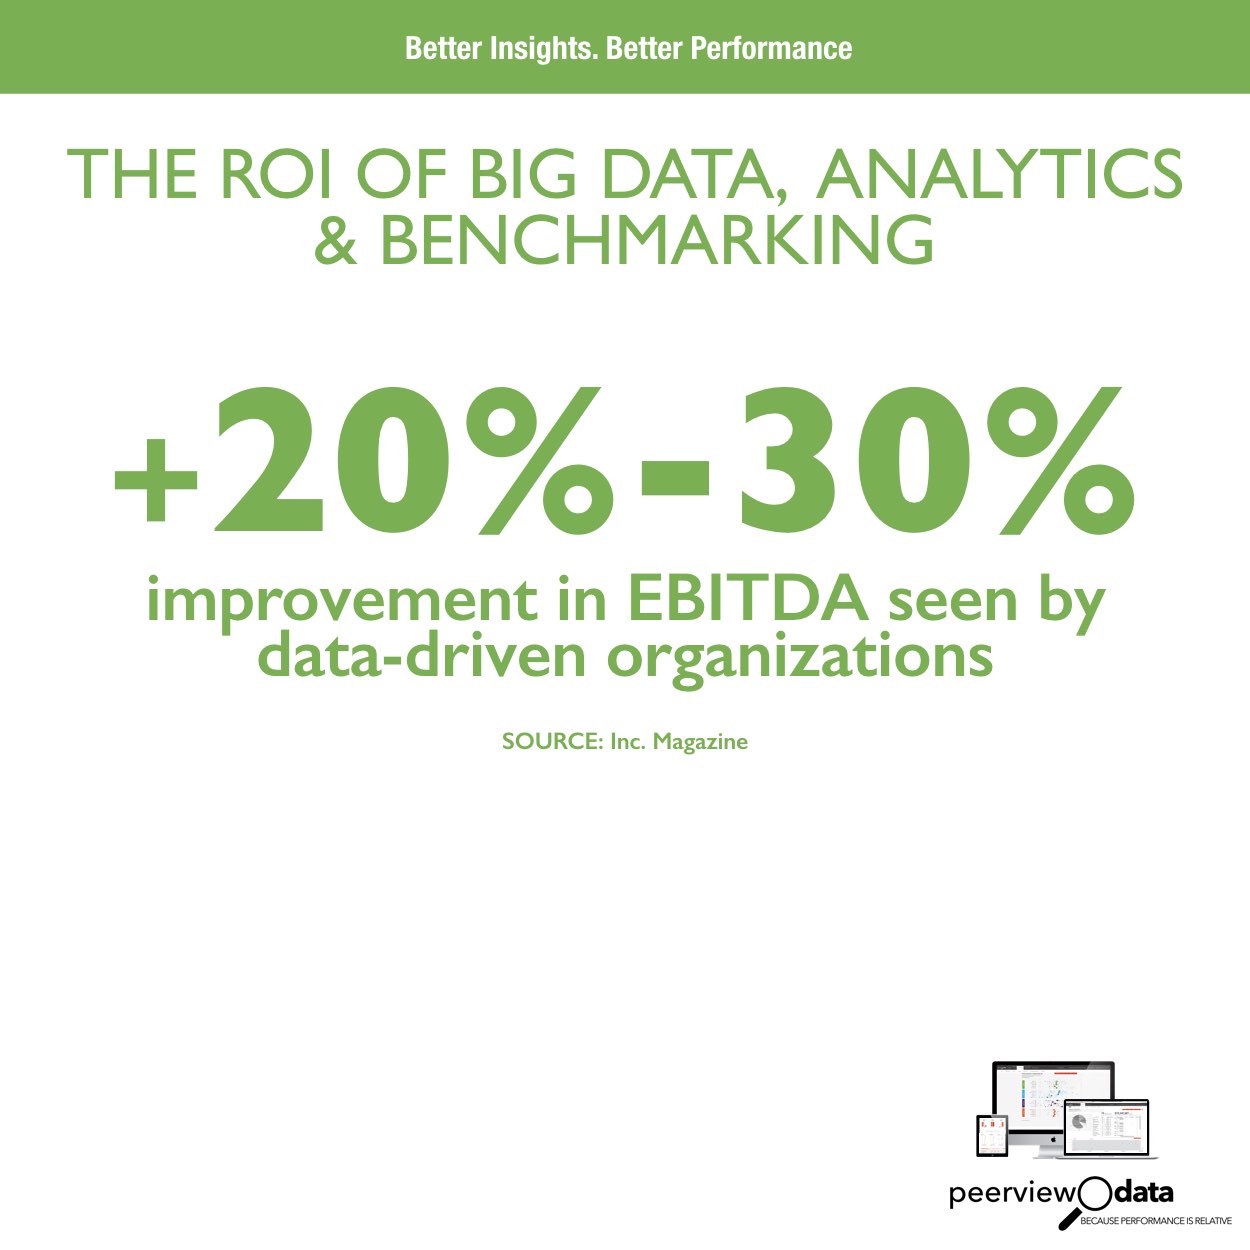 The ROI of Big Data, Analytics & Benchmarking #25